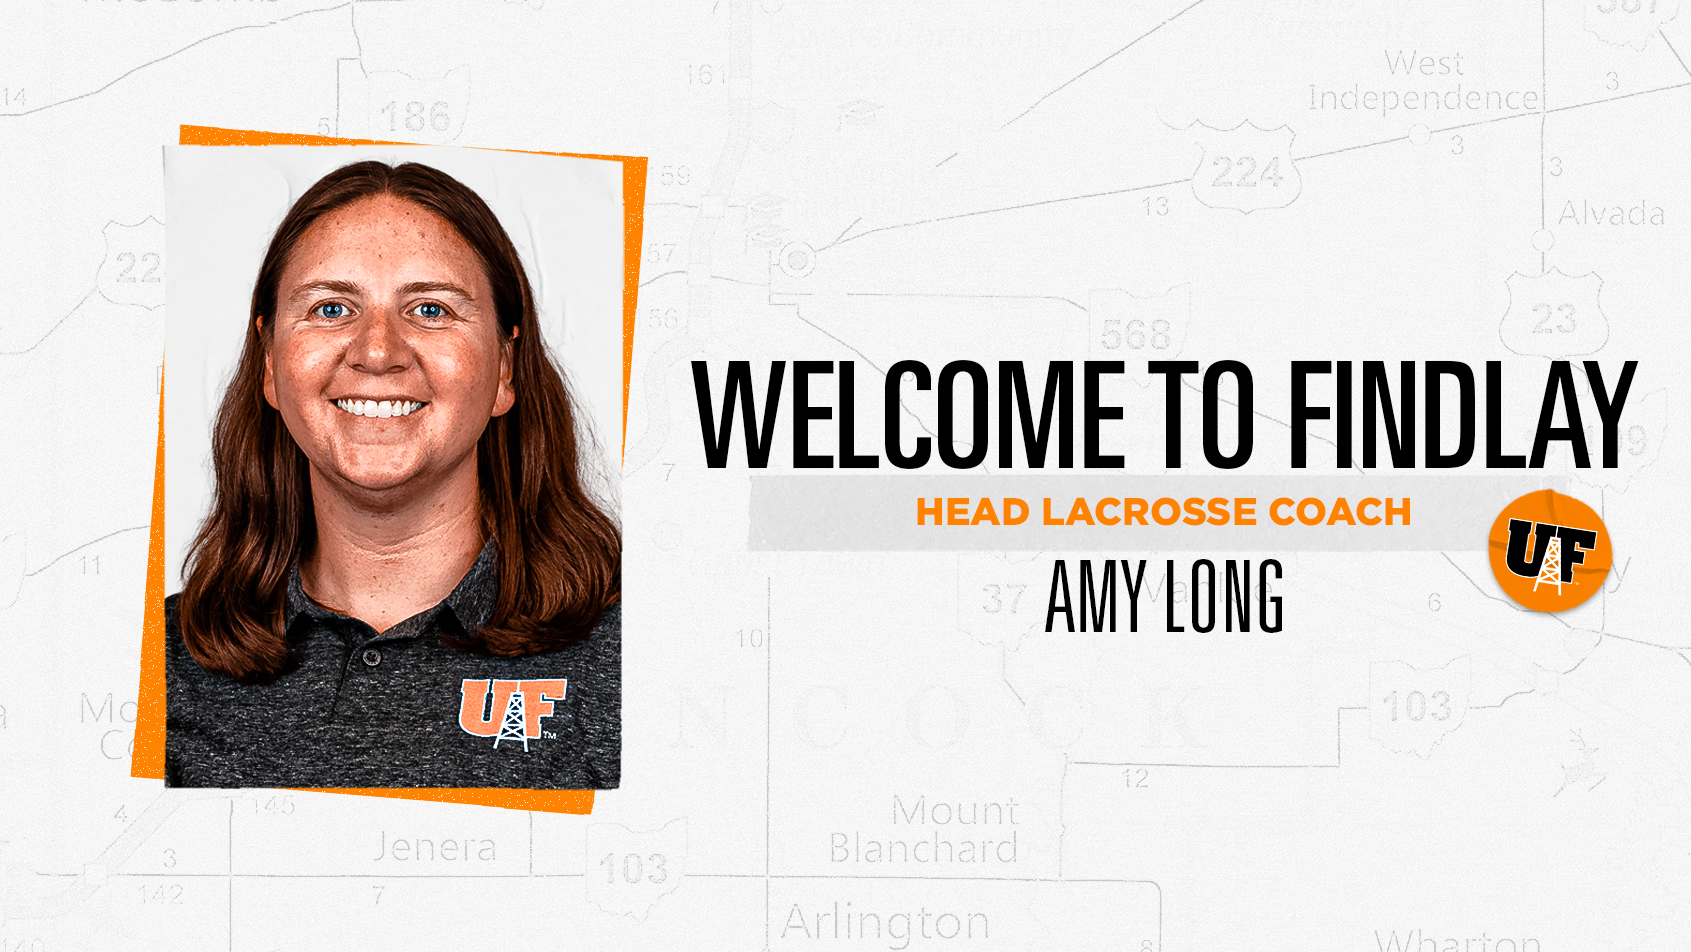 Amy Long Hired as Women's Lacrosse Coach